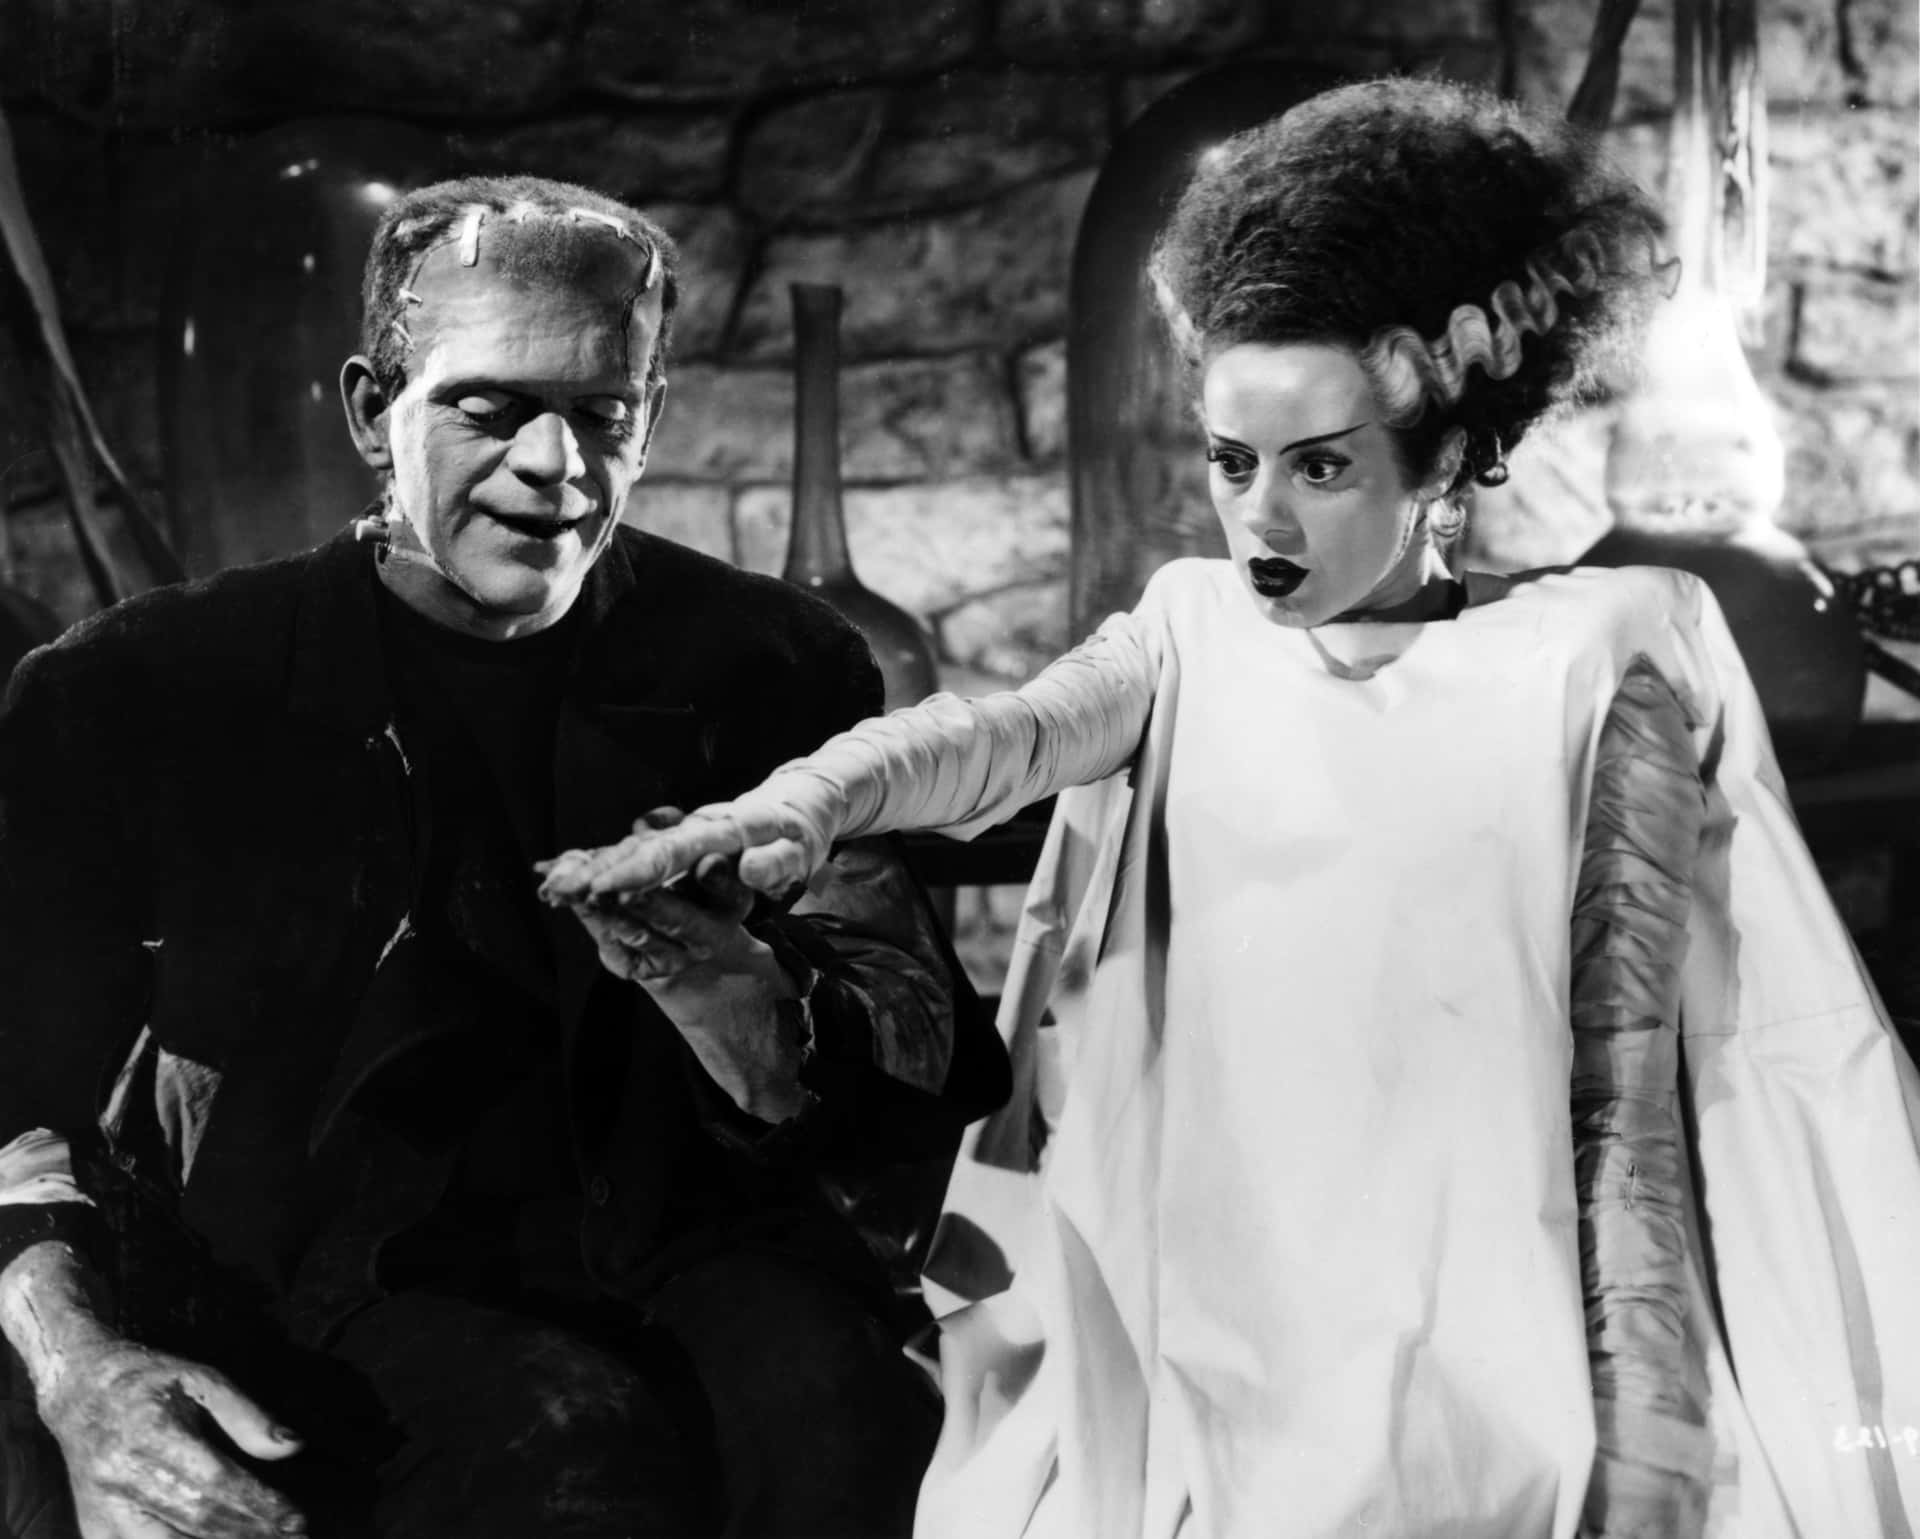 Frankensteinframkallad Från Vetenskapens Kittel.